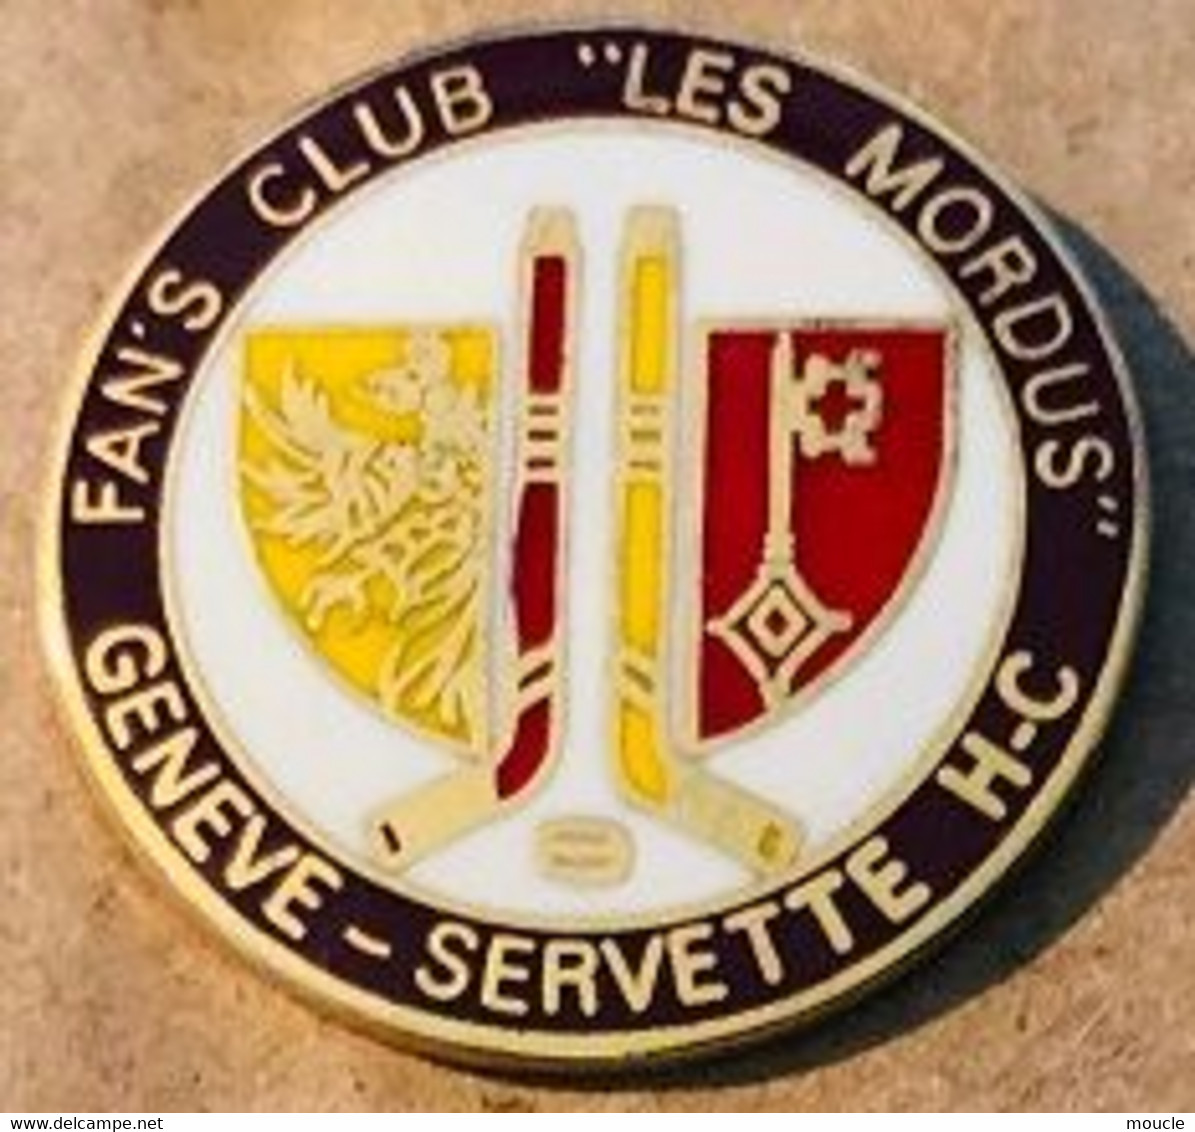 GENEVE SERVETTE HOCKEY CLUB - FAN'S CLUB "LES MORDUS"- ICE - AIGLE - GENEVA - SUISSE - SCHWEIZ - SWITZERLAND -     (28) - Sports D'hiver